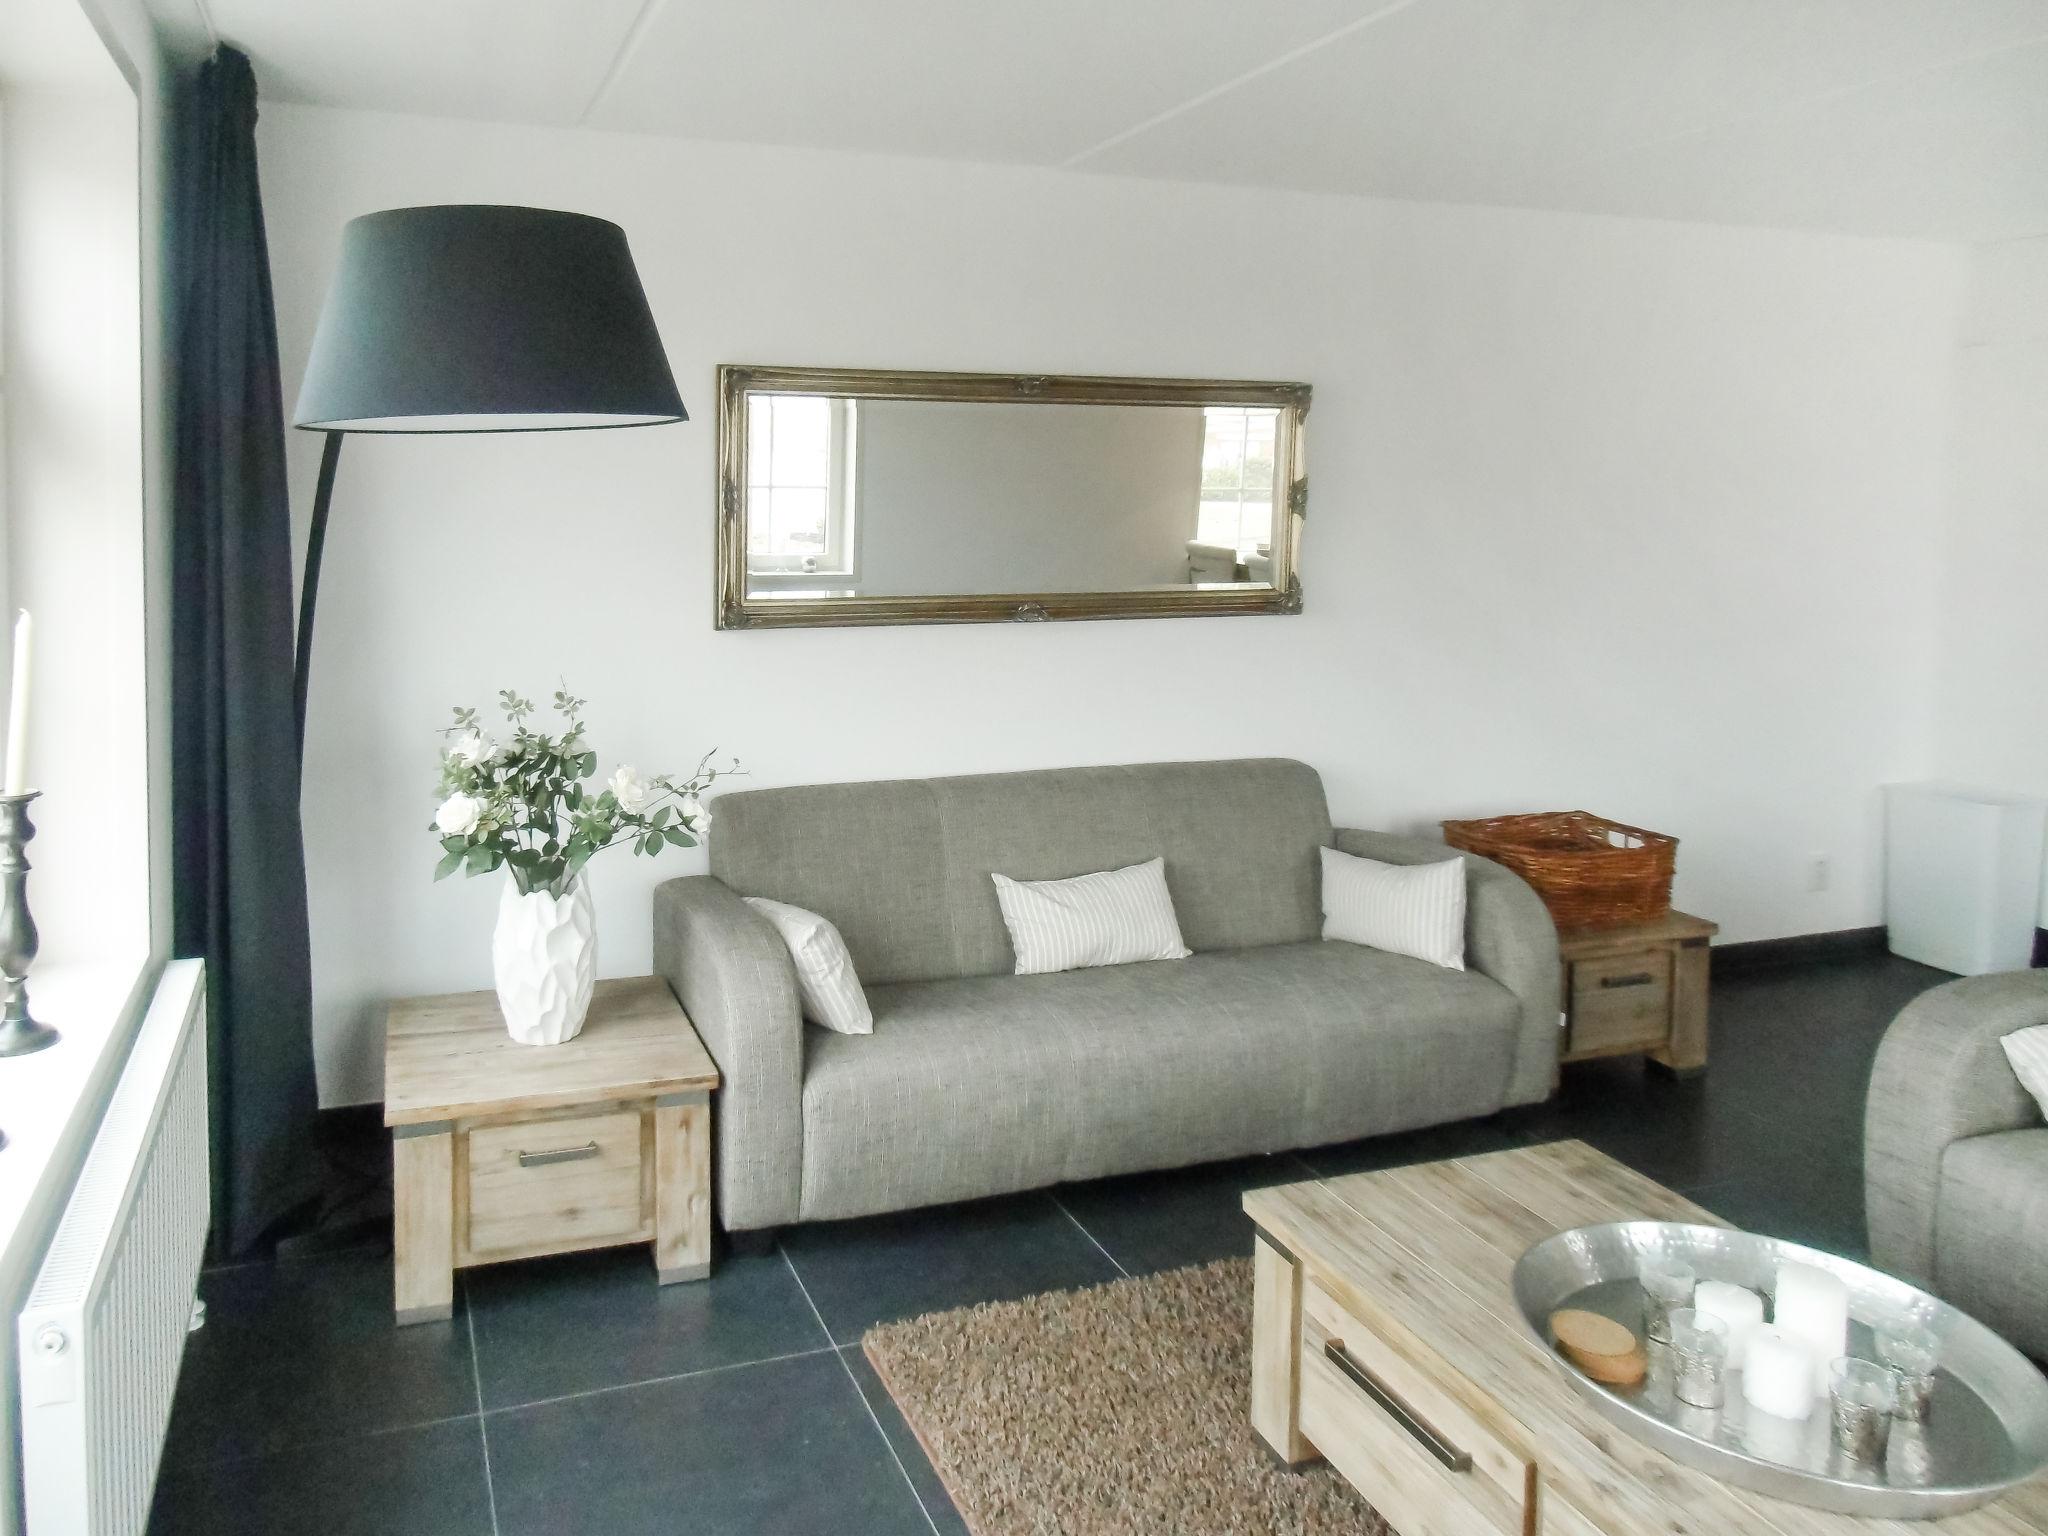 Photo 2 - 3 bedroom House in West-Graftdijk with terrace